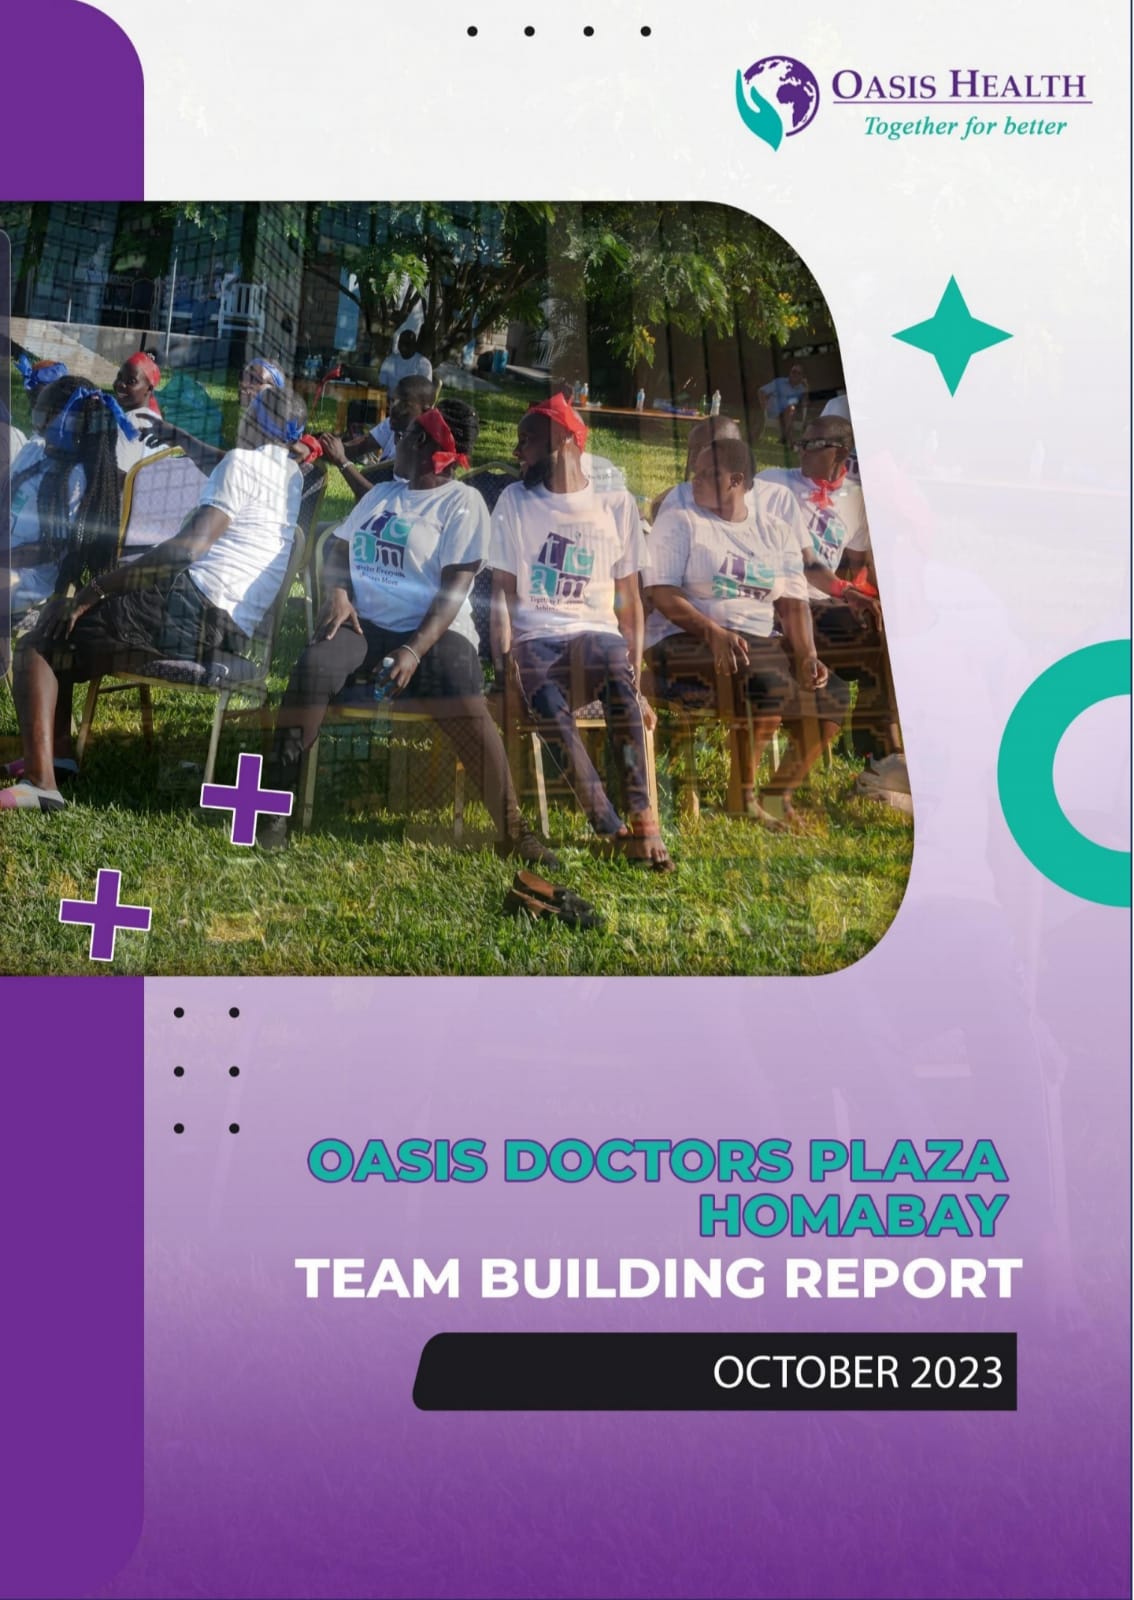 Oasis Doctors Plaza: Team Building